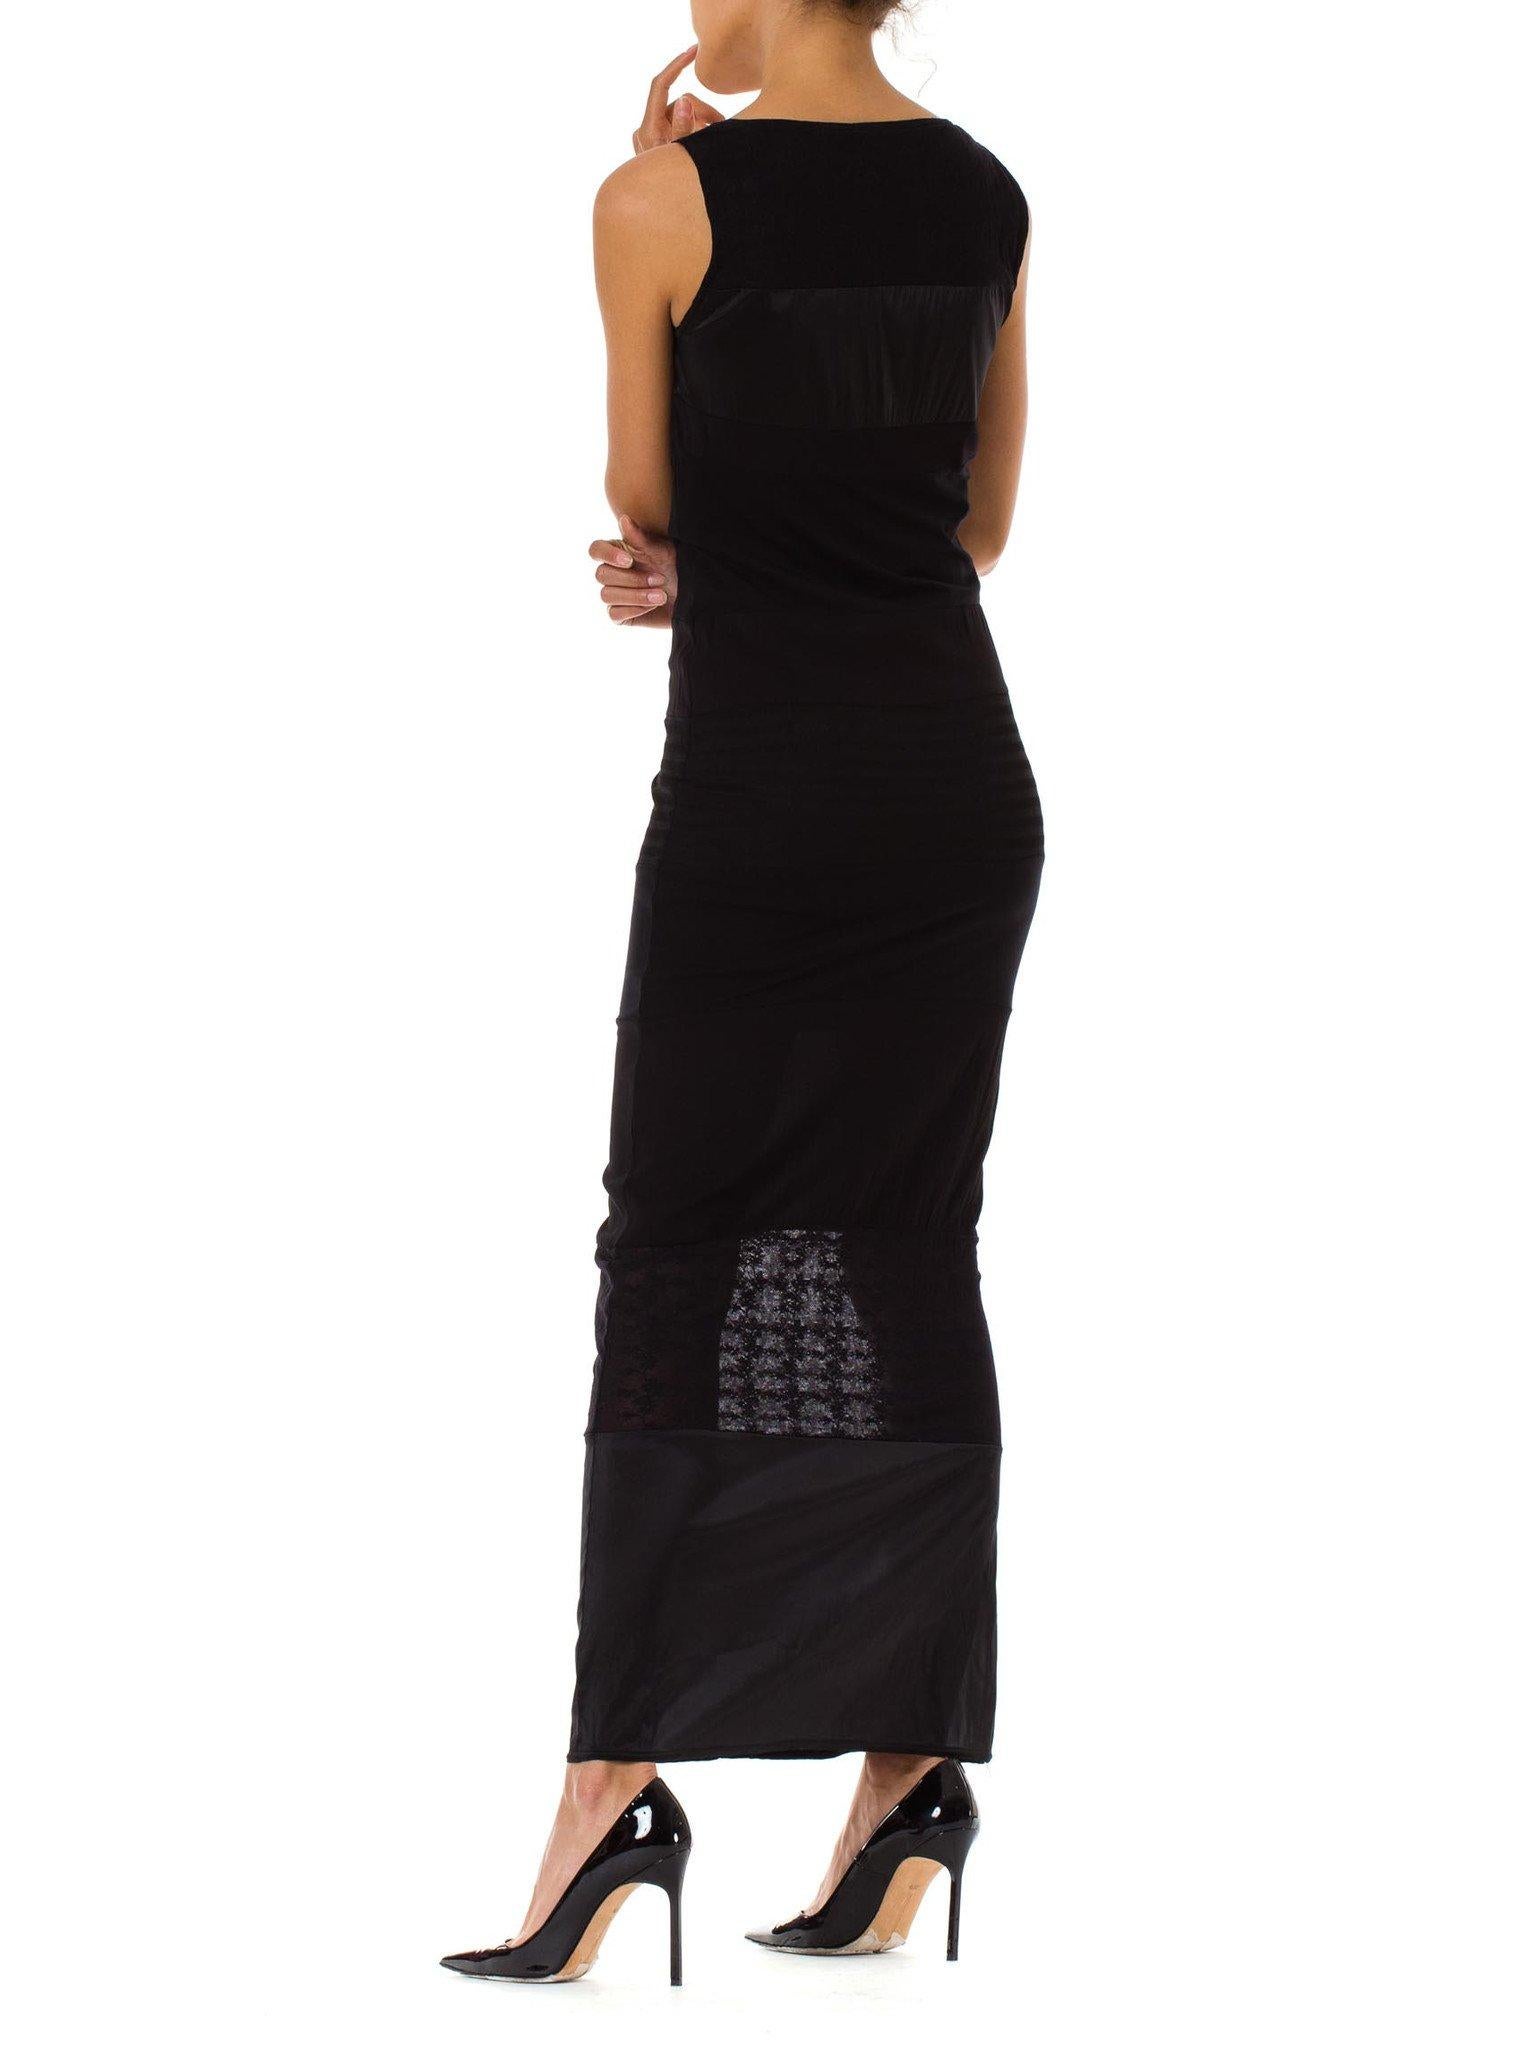 1990S OZBEK Black Sheer Poly/Lycra Minimalist Patchwork Dress For Sale ...